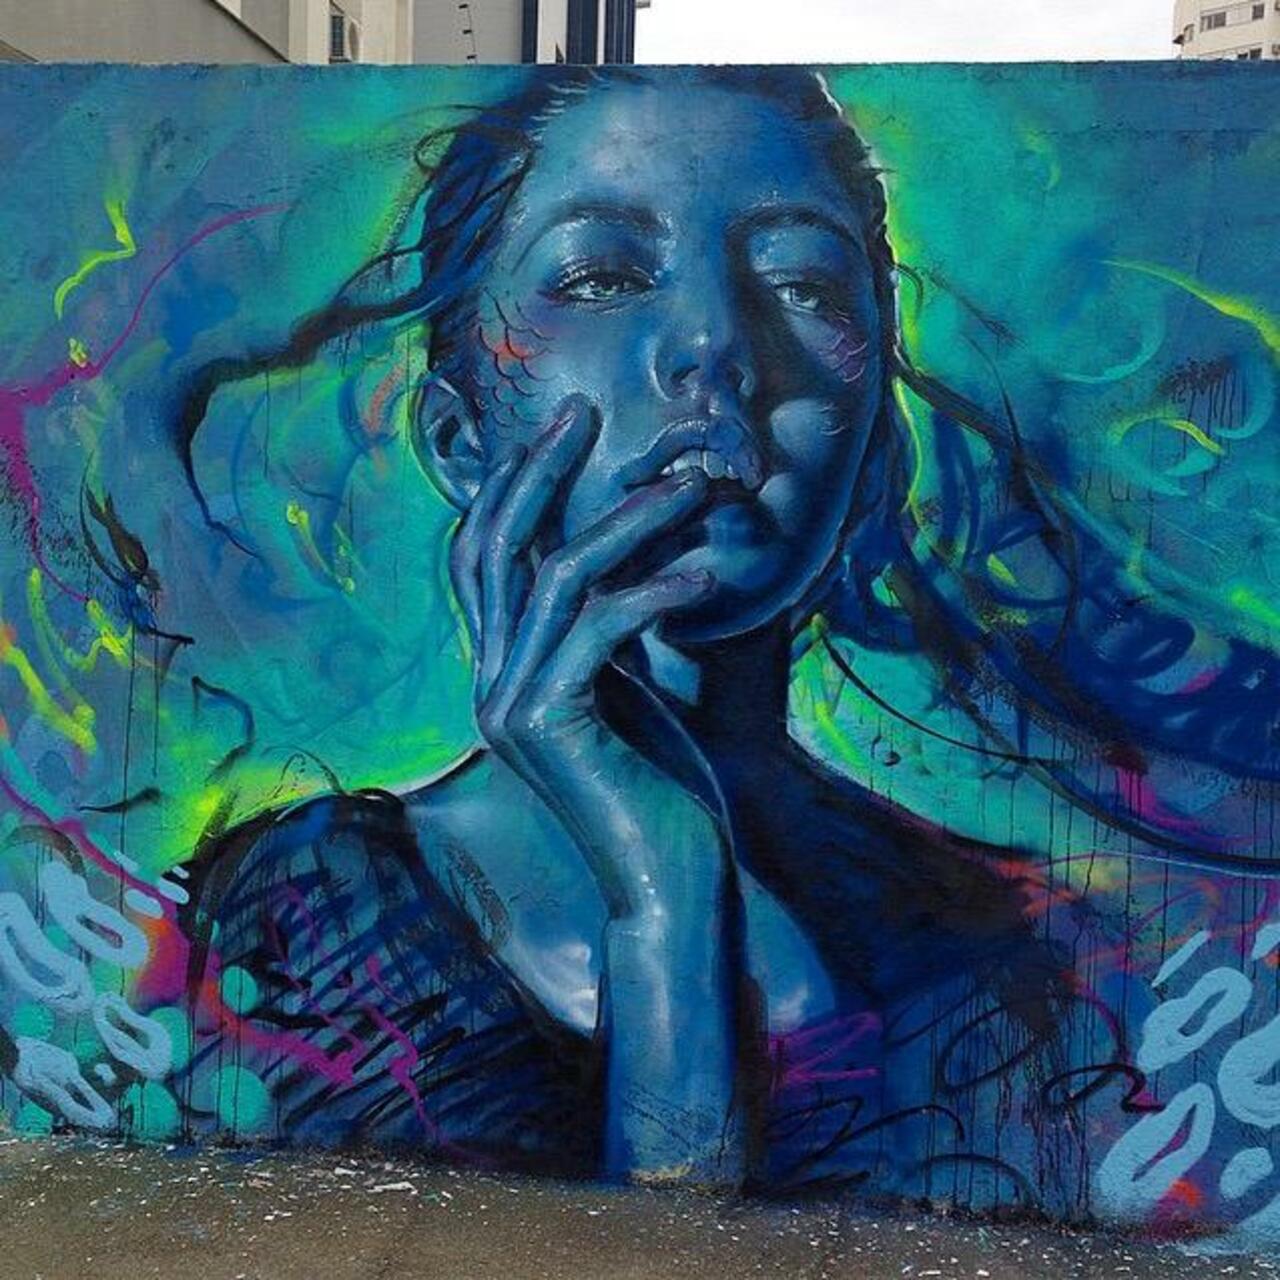 Thiago Valdi new Street Art piece titled 'Day Dreamer'

#art #mural #graffiti #streetart http://t.co/z6pKSEtYFb